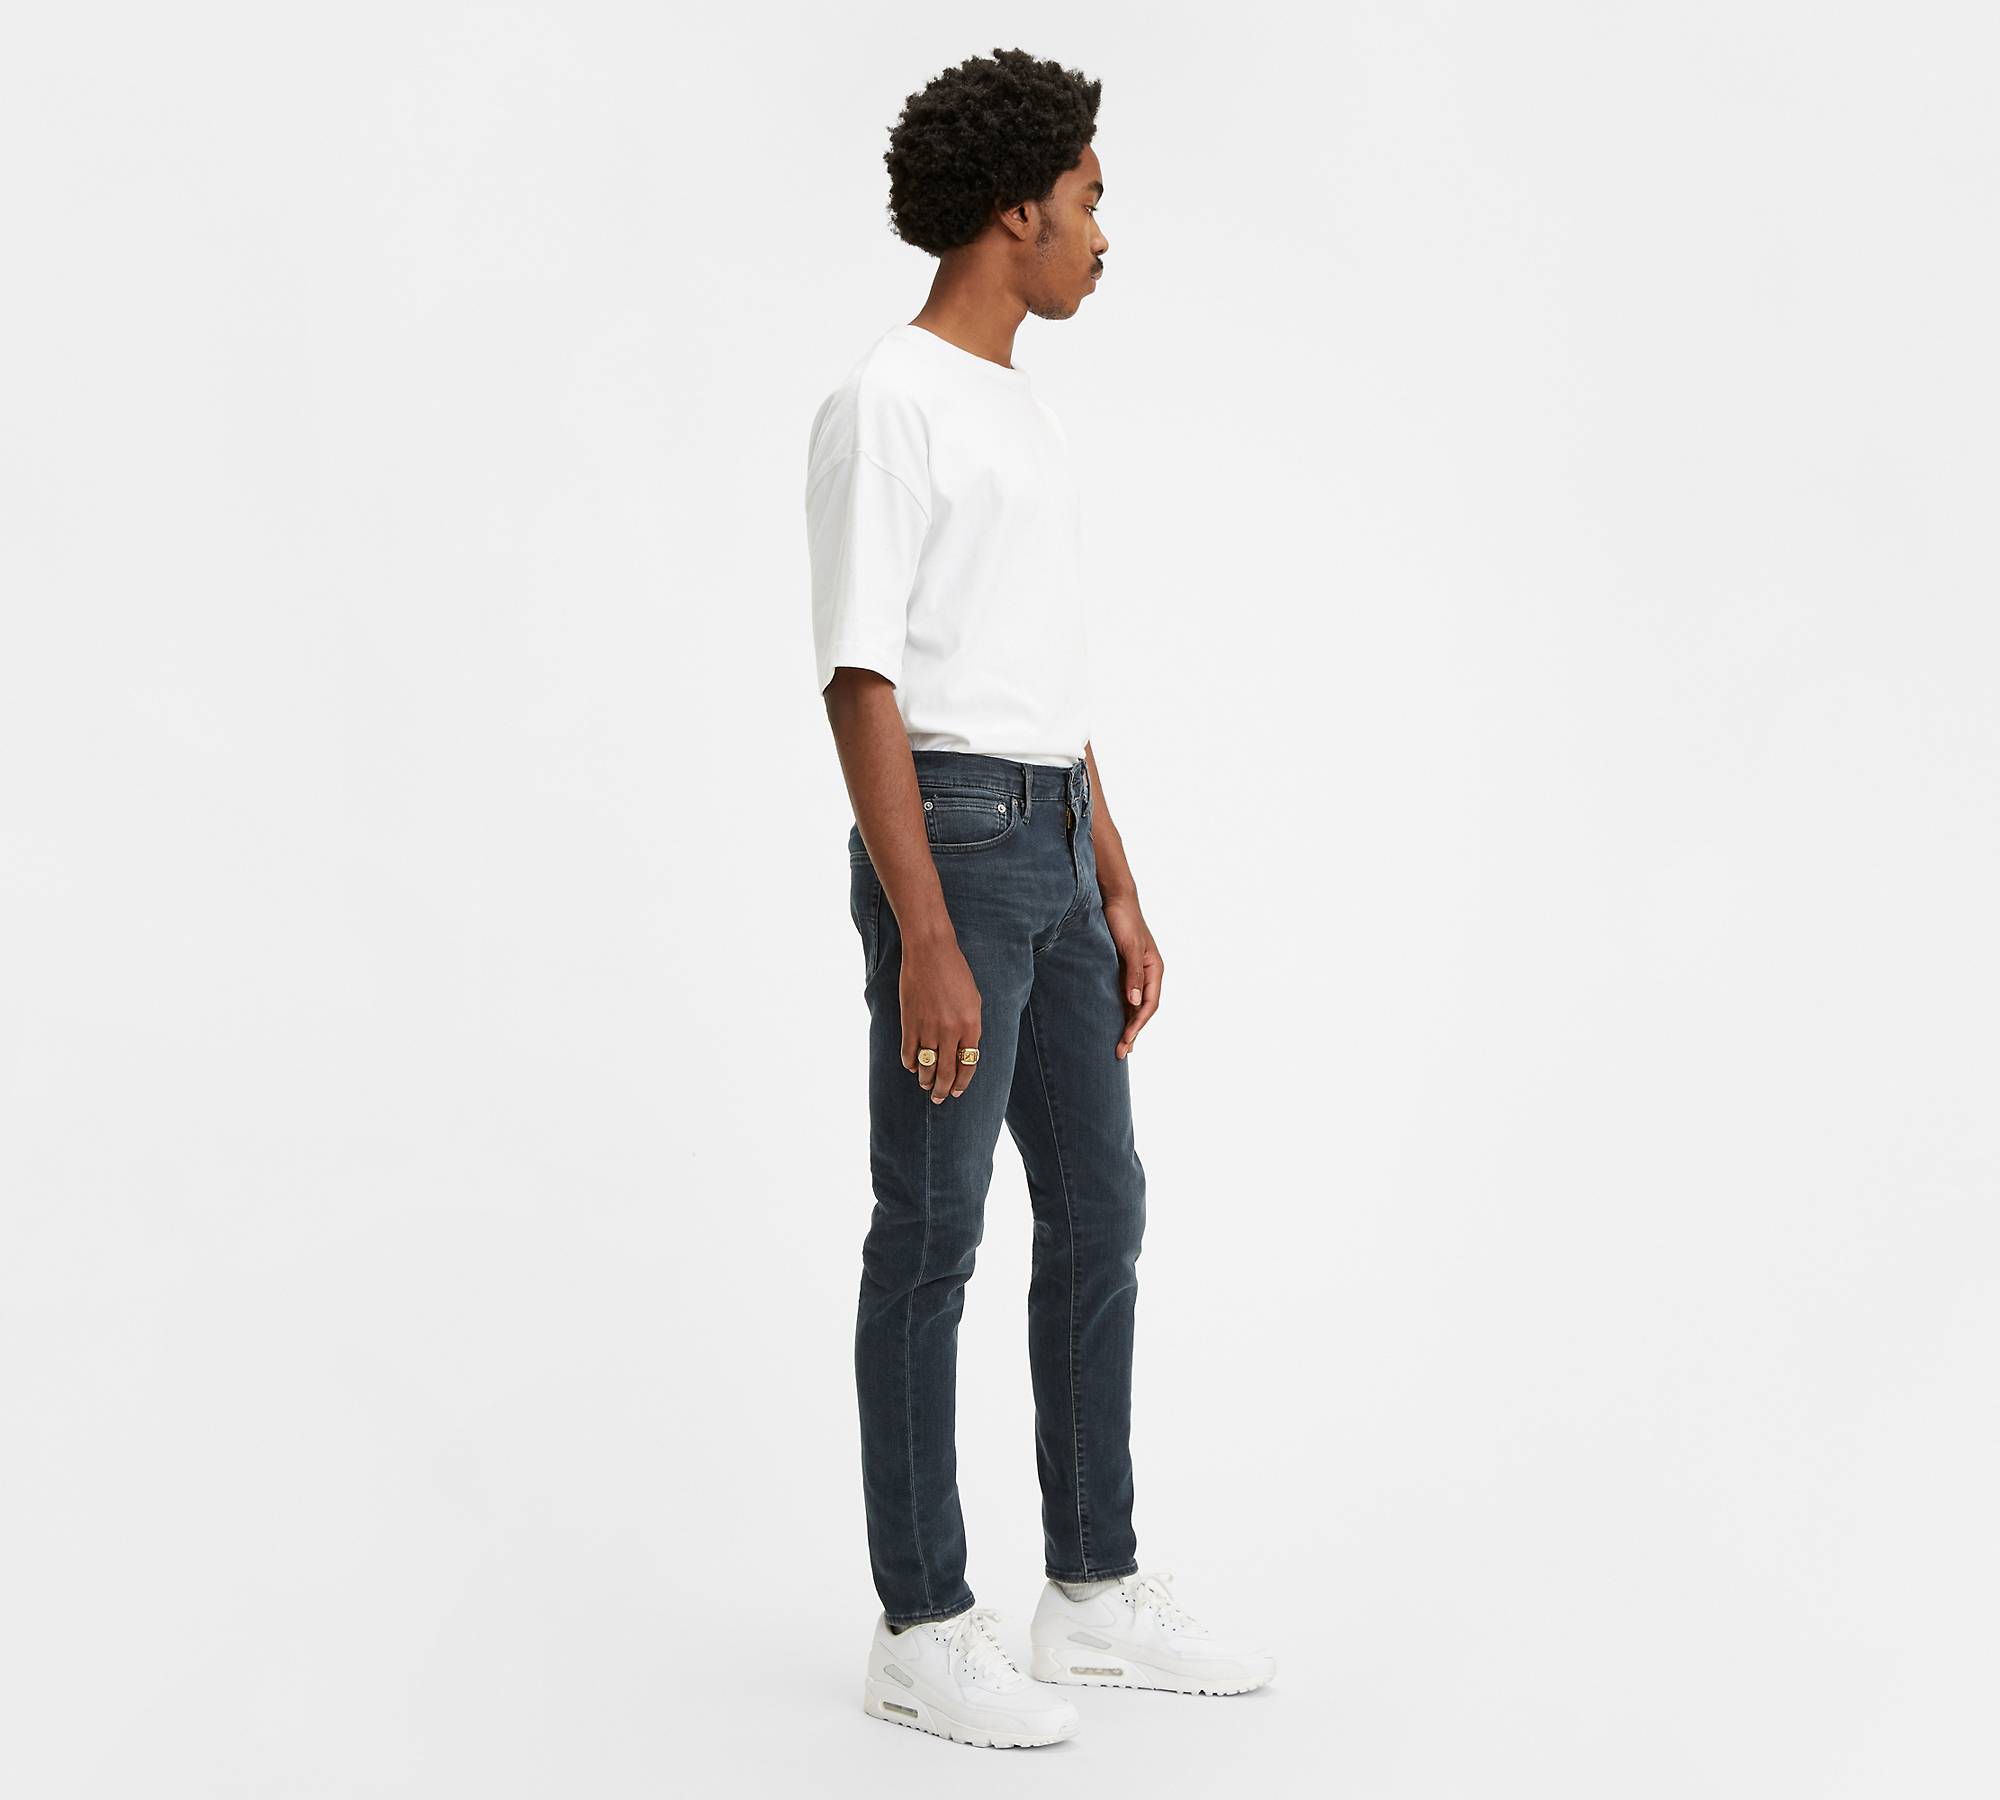 512™ Slim Taper Fit Levi's® Flex Men's Jeans - Dark Wash